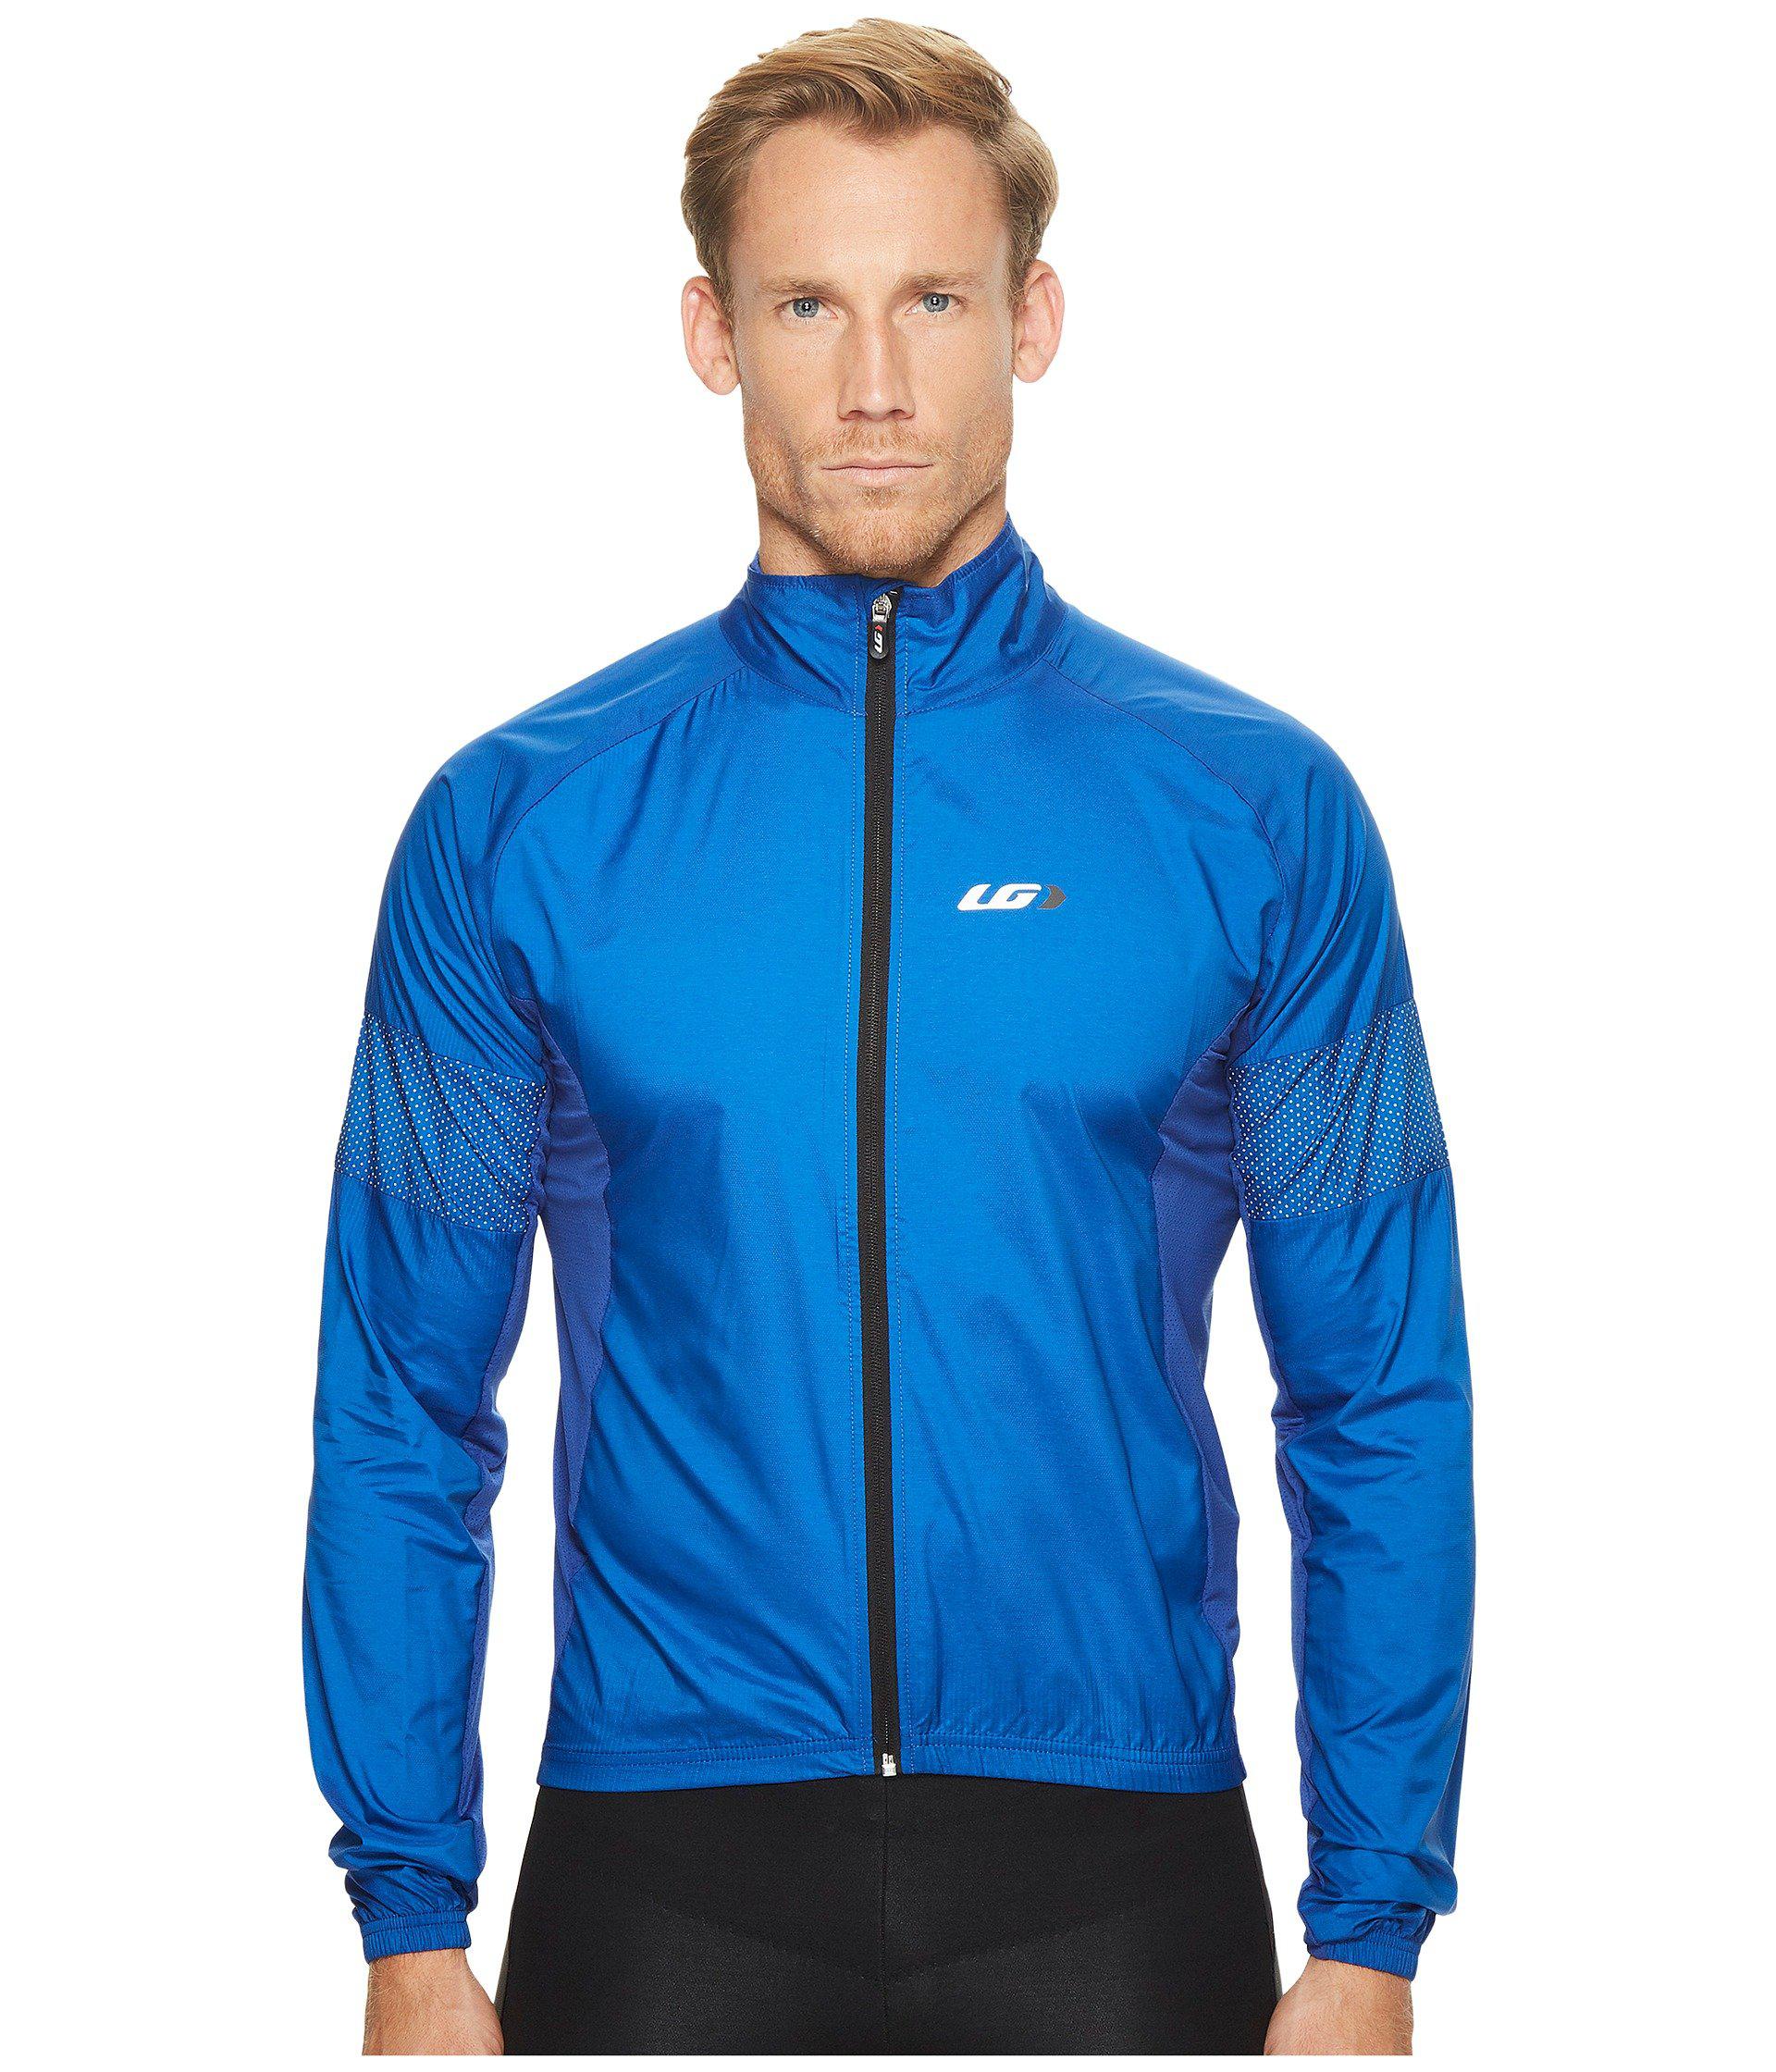 Louis Garneau Synthetic Modesto 3 Cycling Jacket in Cobalt Blue (Blue) for Men - Lyst